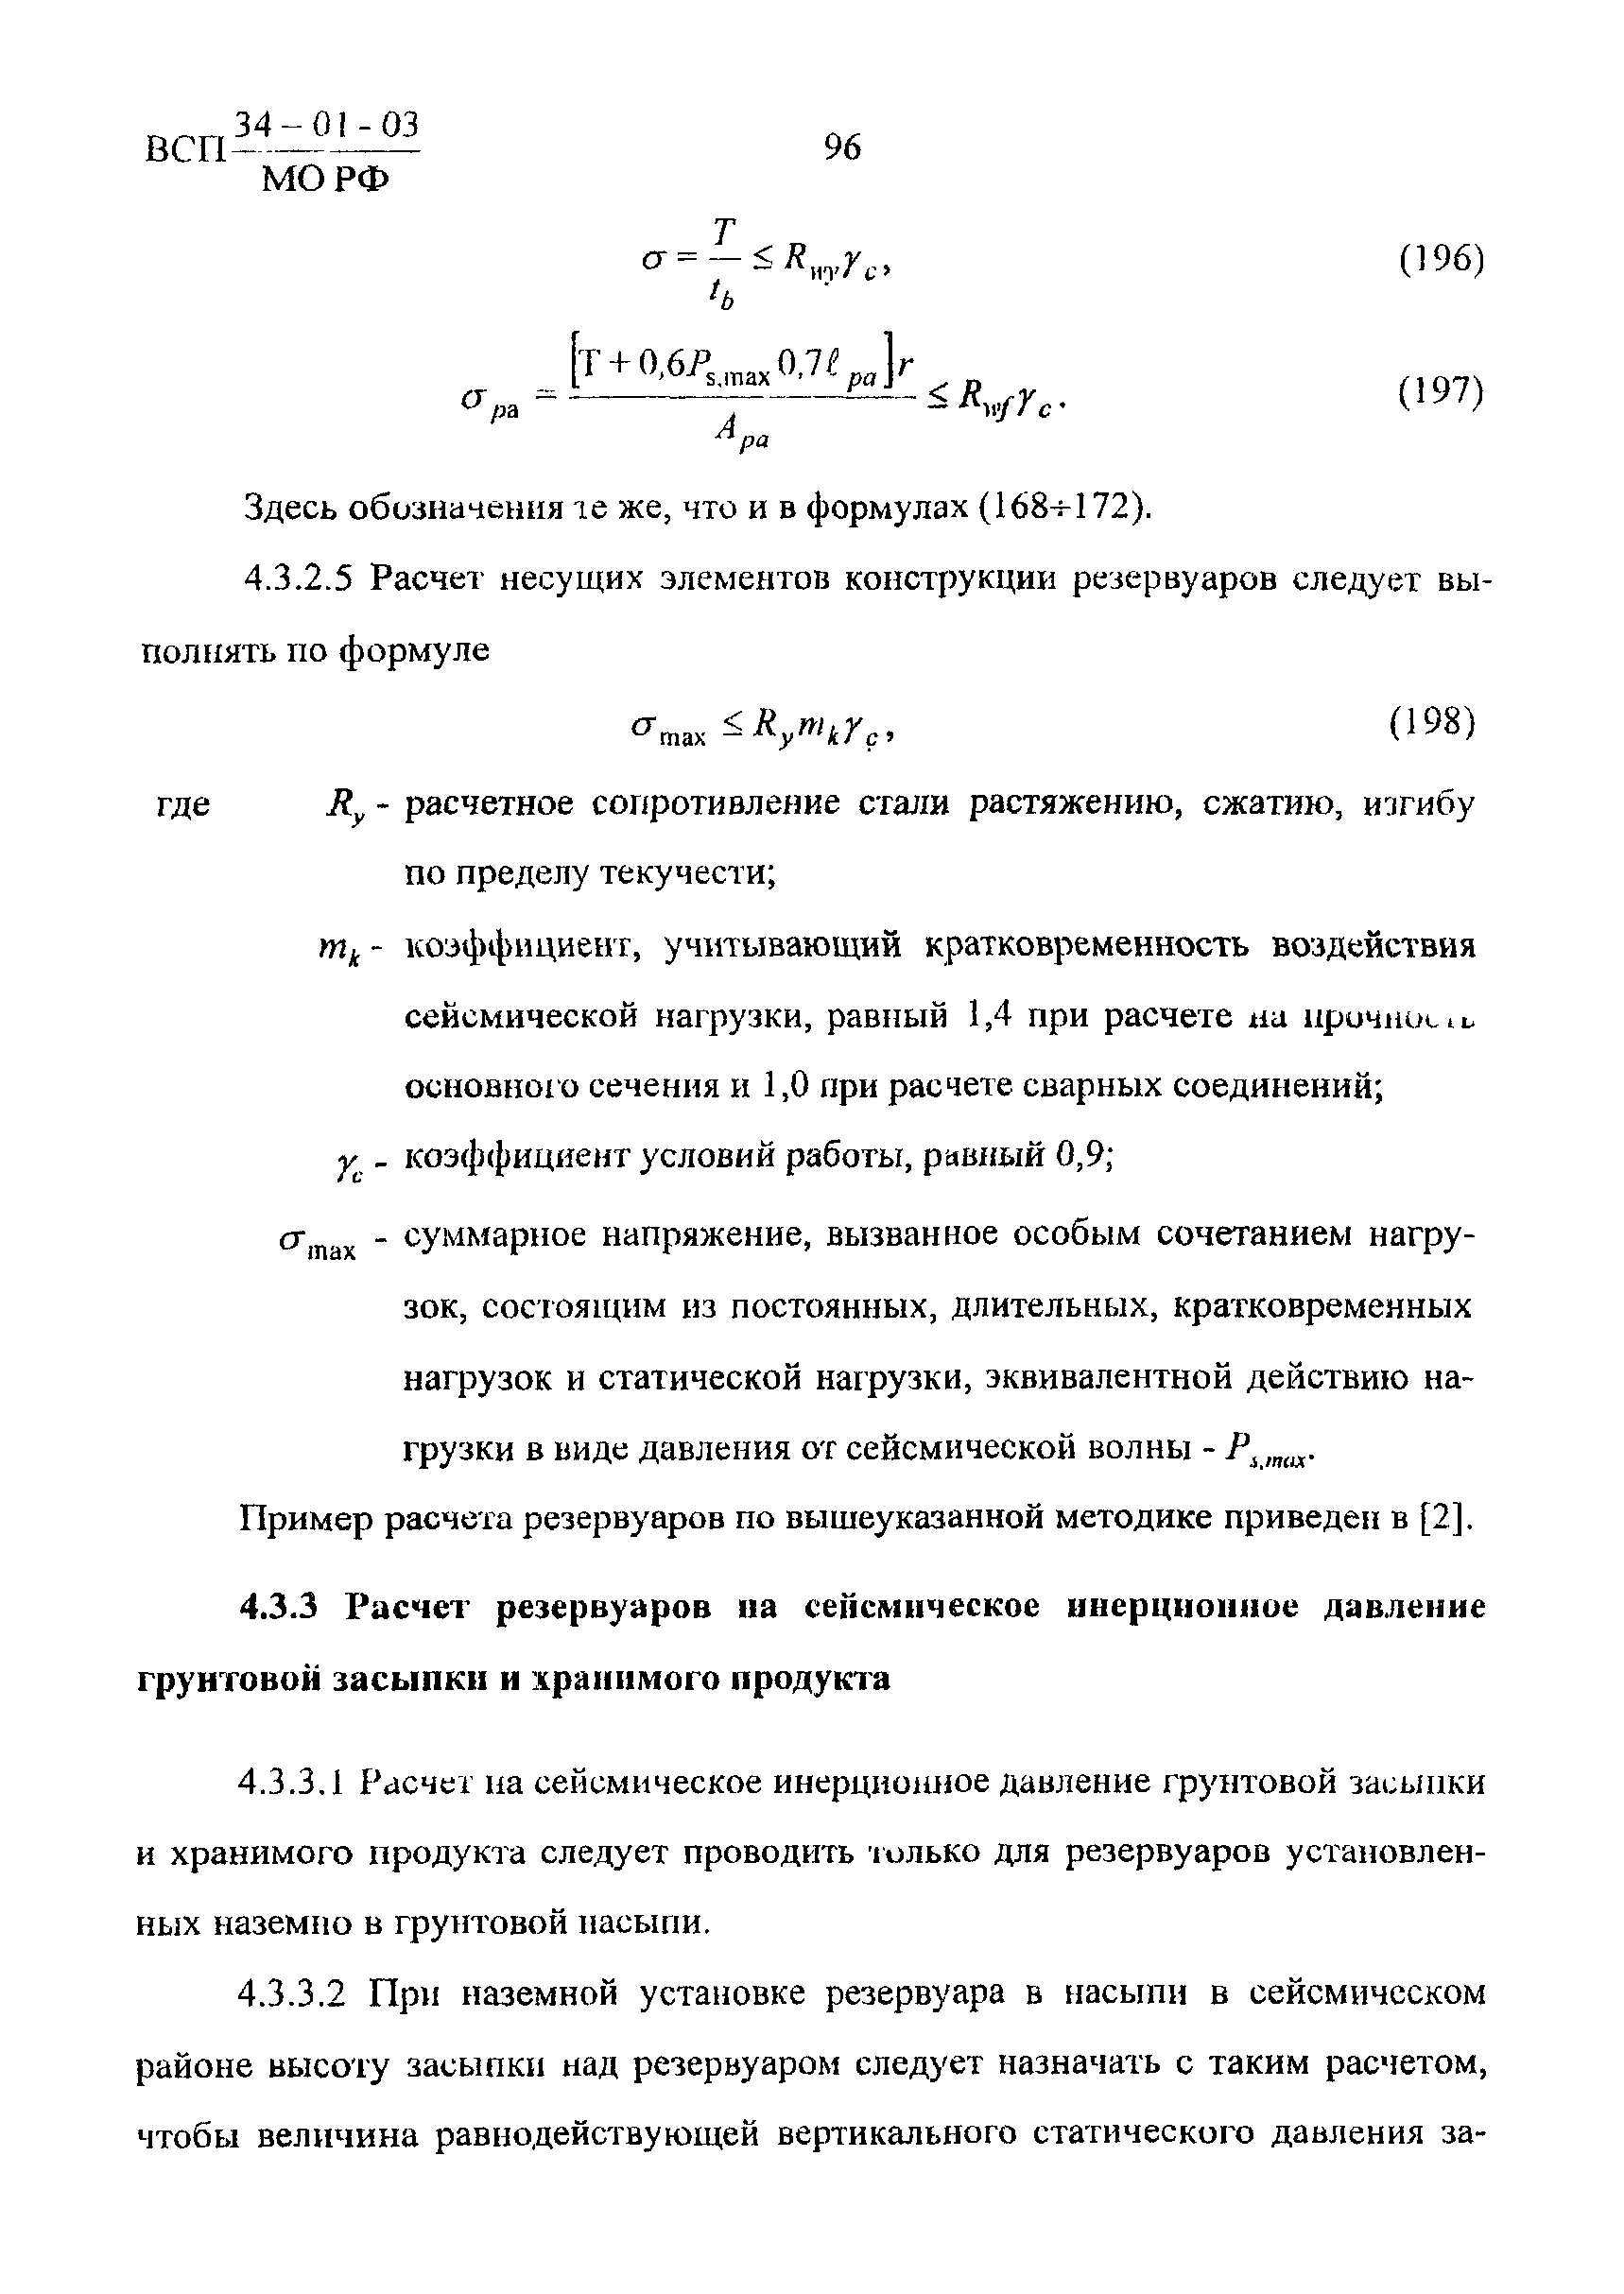 ВСП 34-01-03 МО РФ